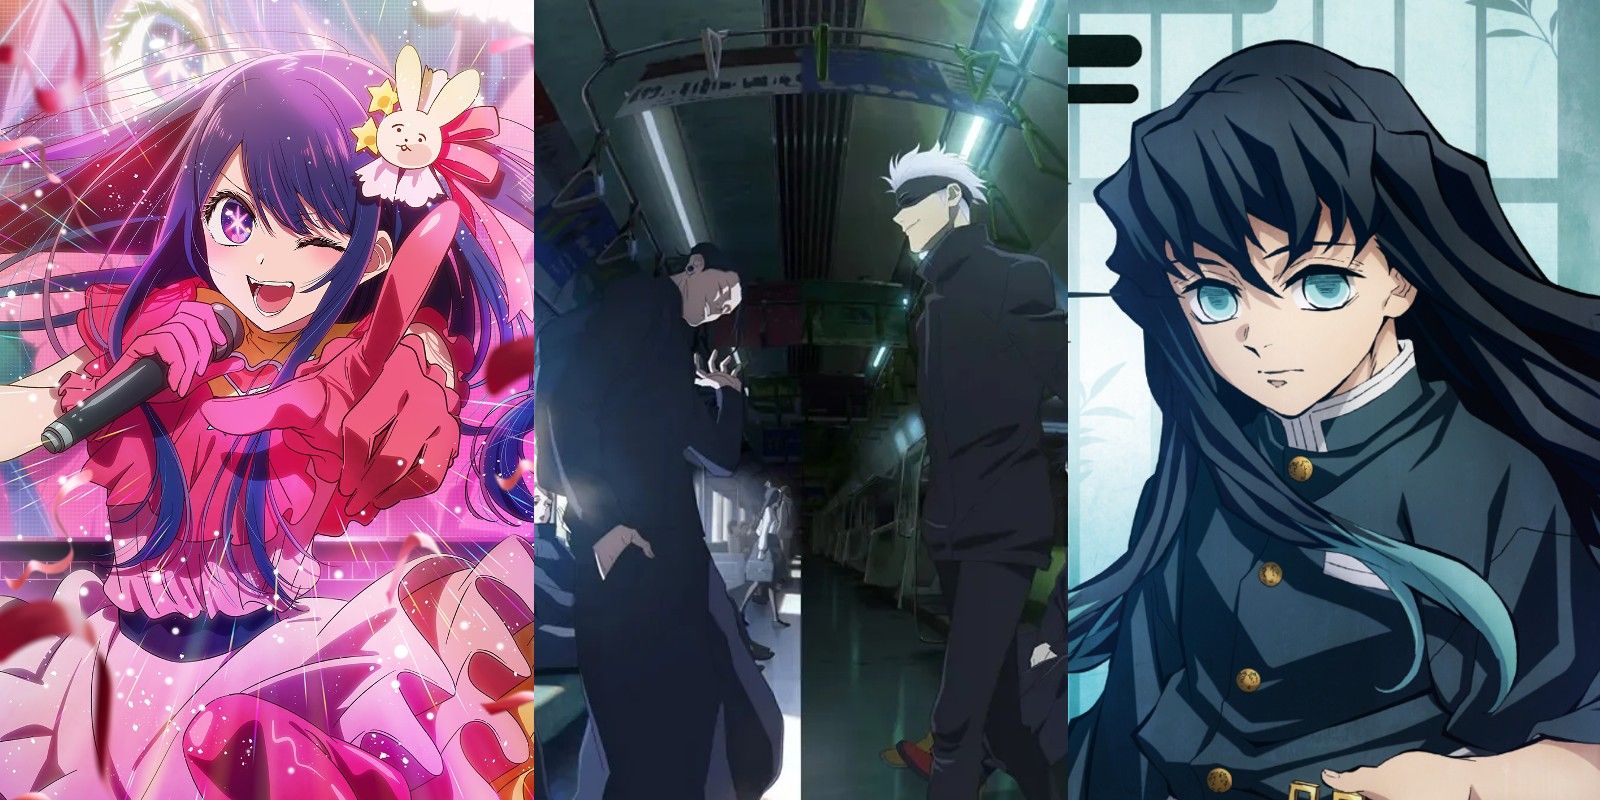 Oshi no Ko: Does the anime live up to the hype?